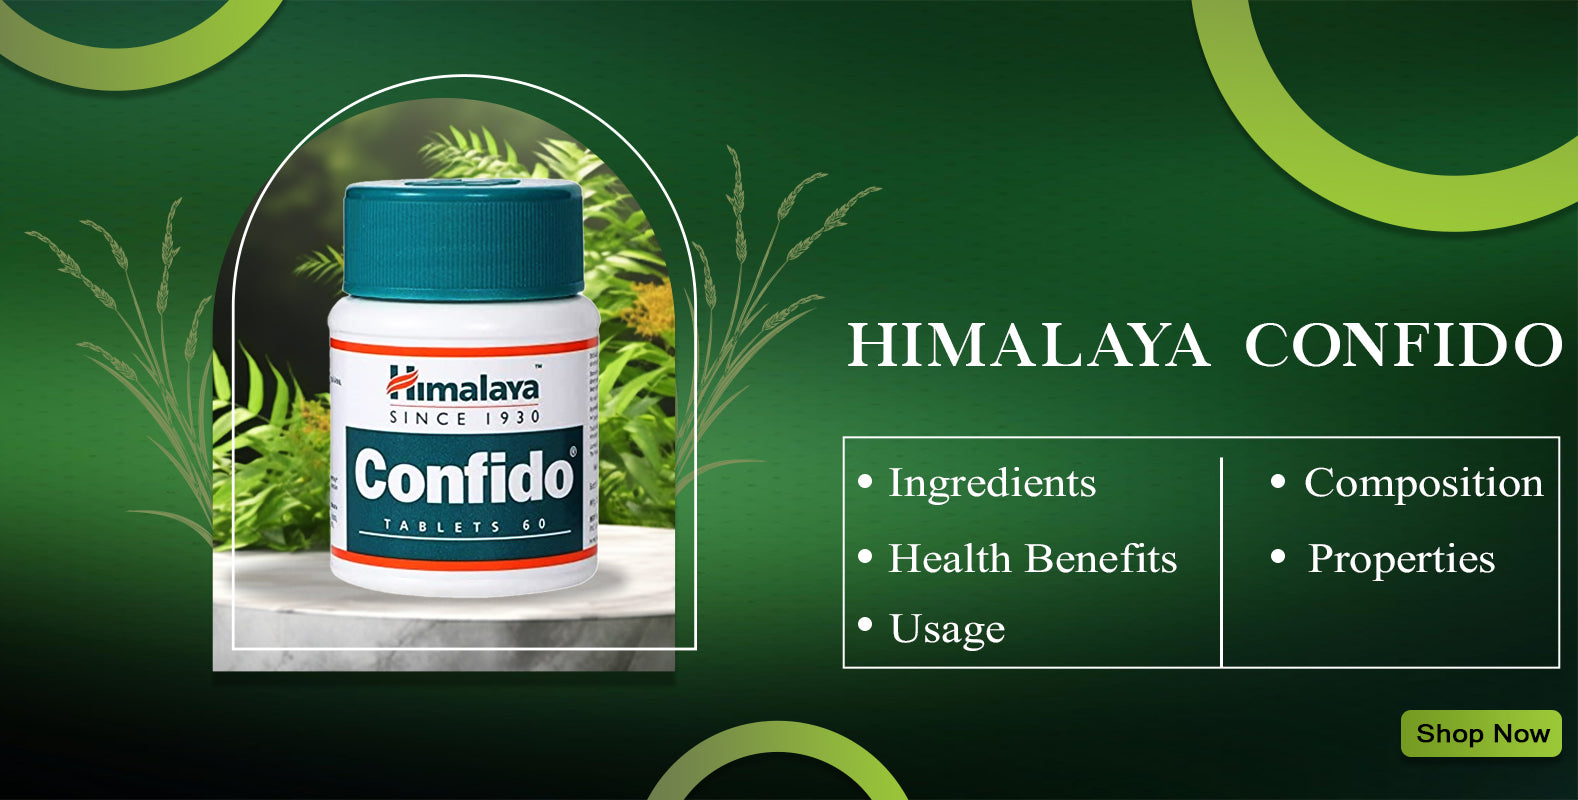 Himalaya Confido Tablets - Ingredients, Composition, Health Benefits ...